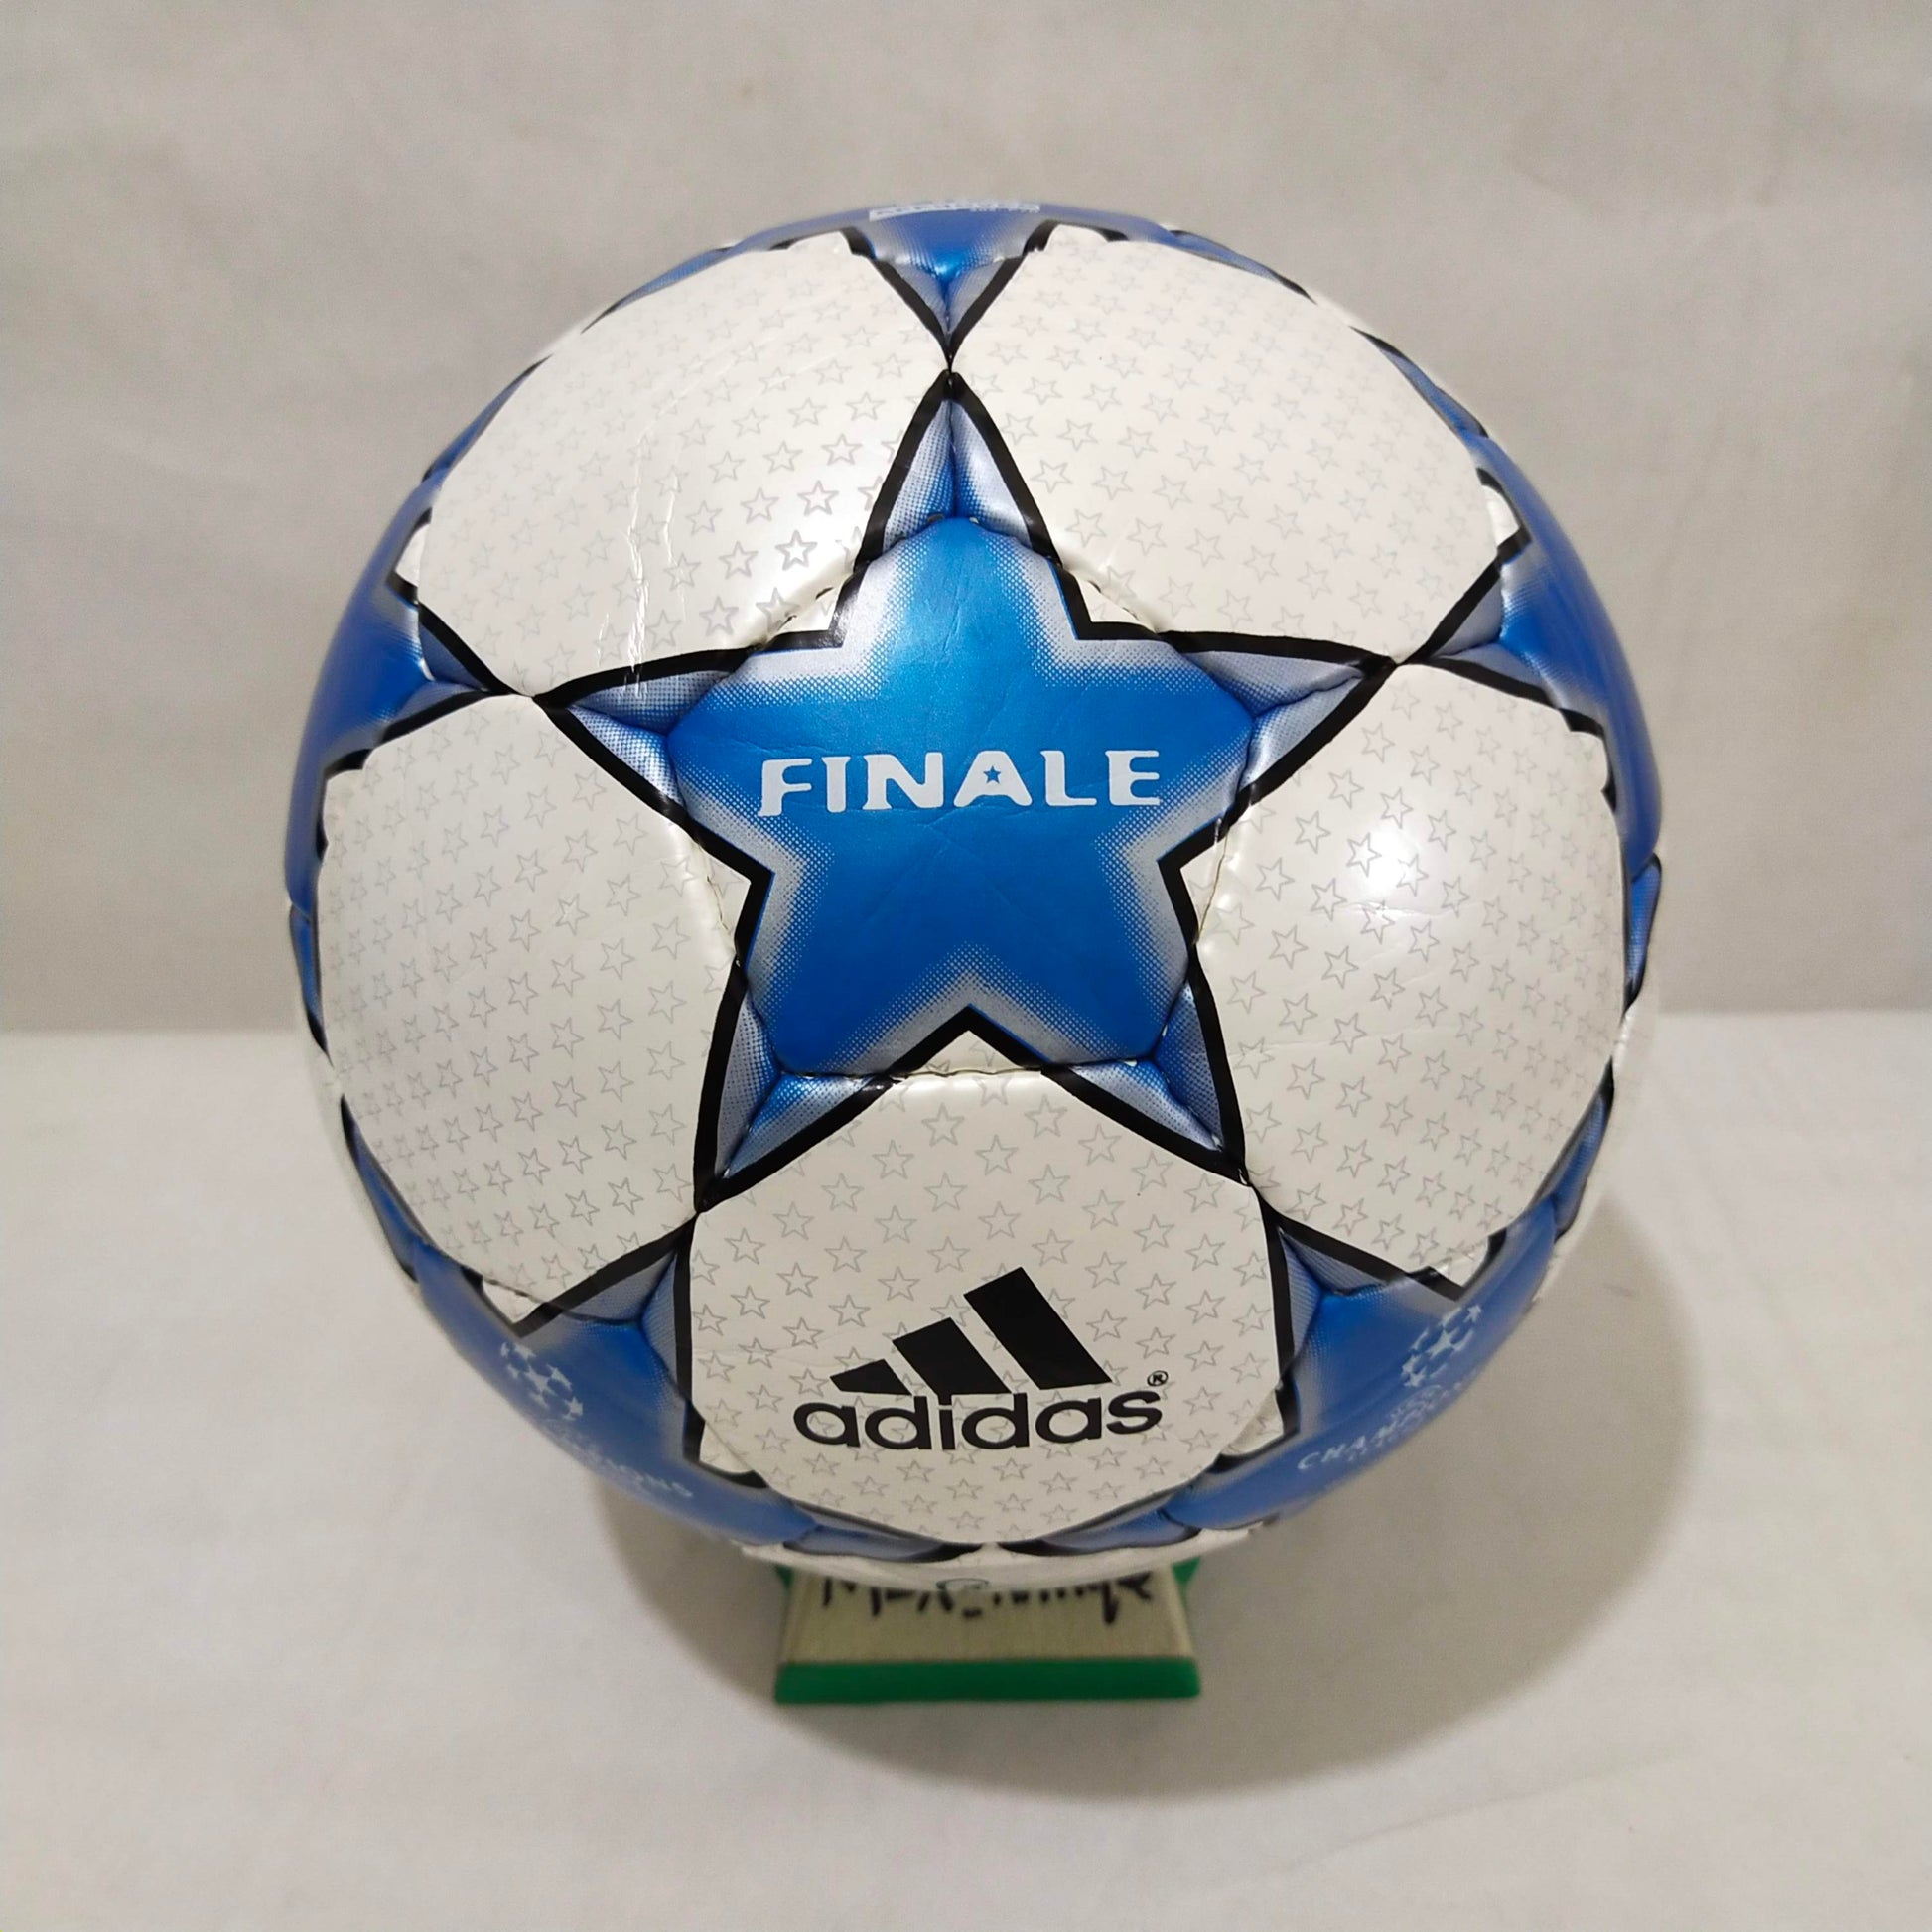 Adidas Finale Istanbul | 2004-2005 | Final Ball | UEFA Champions League Ball | Size 5 01